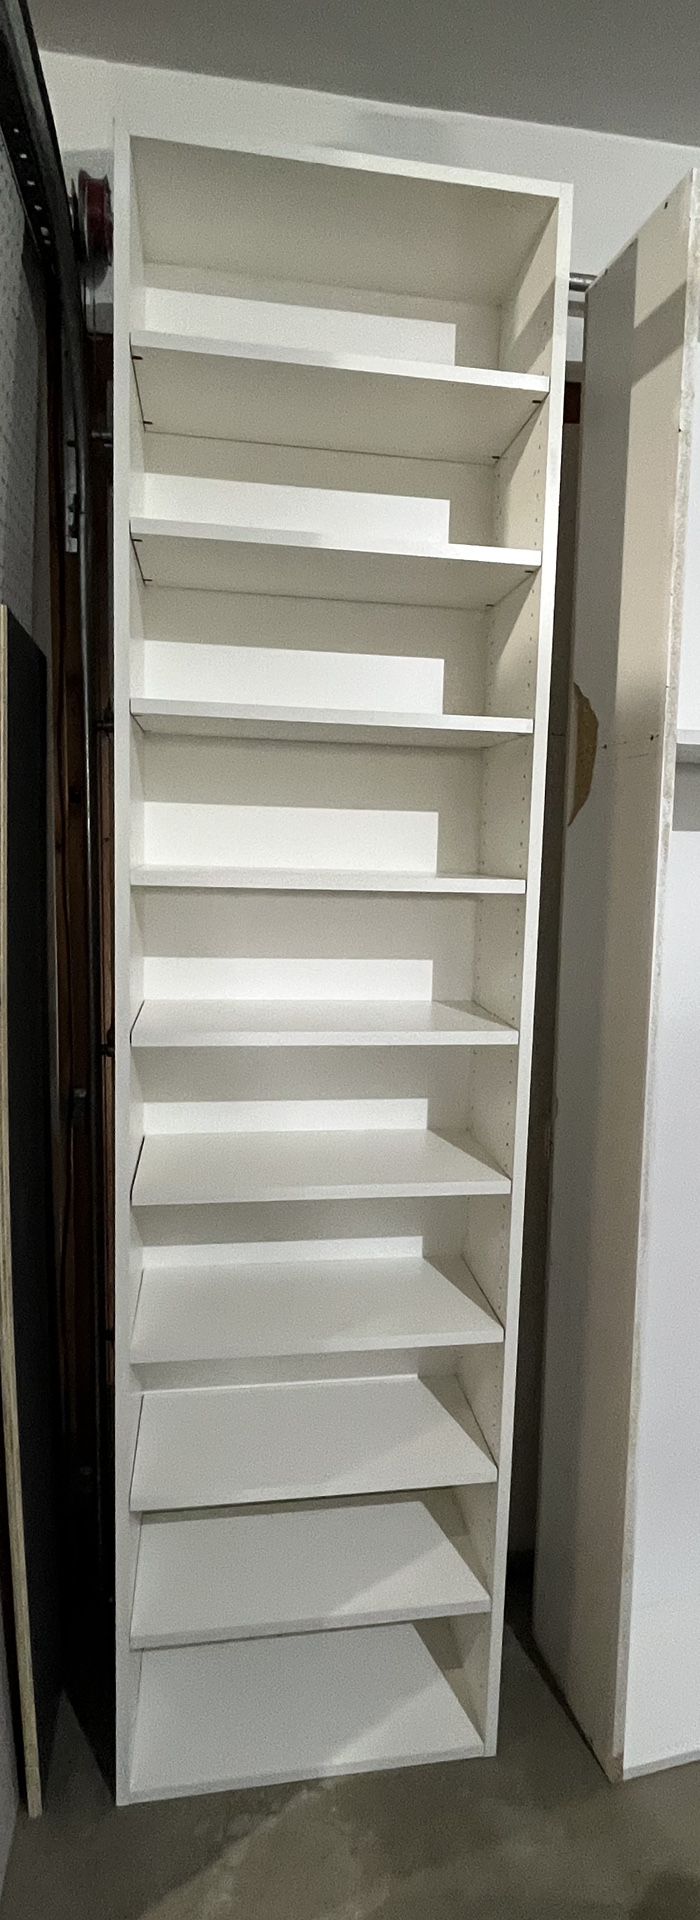 Bookcase, Shoe Rack, Pantry Cabinet,  Misc Decor Cabinet